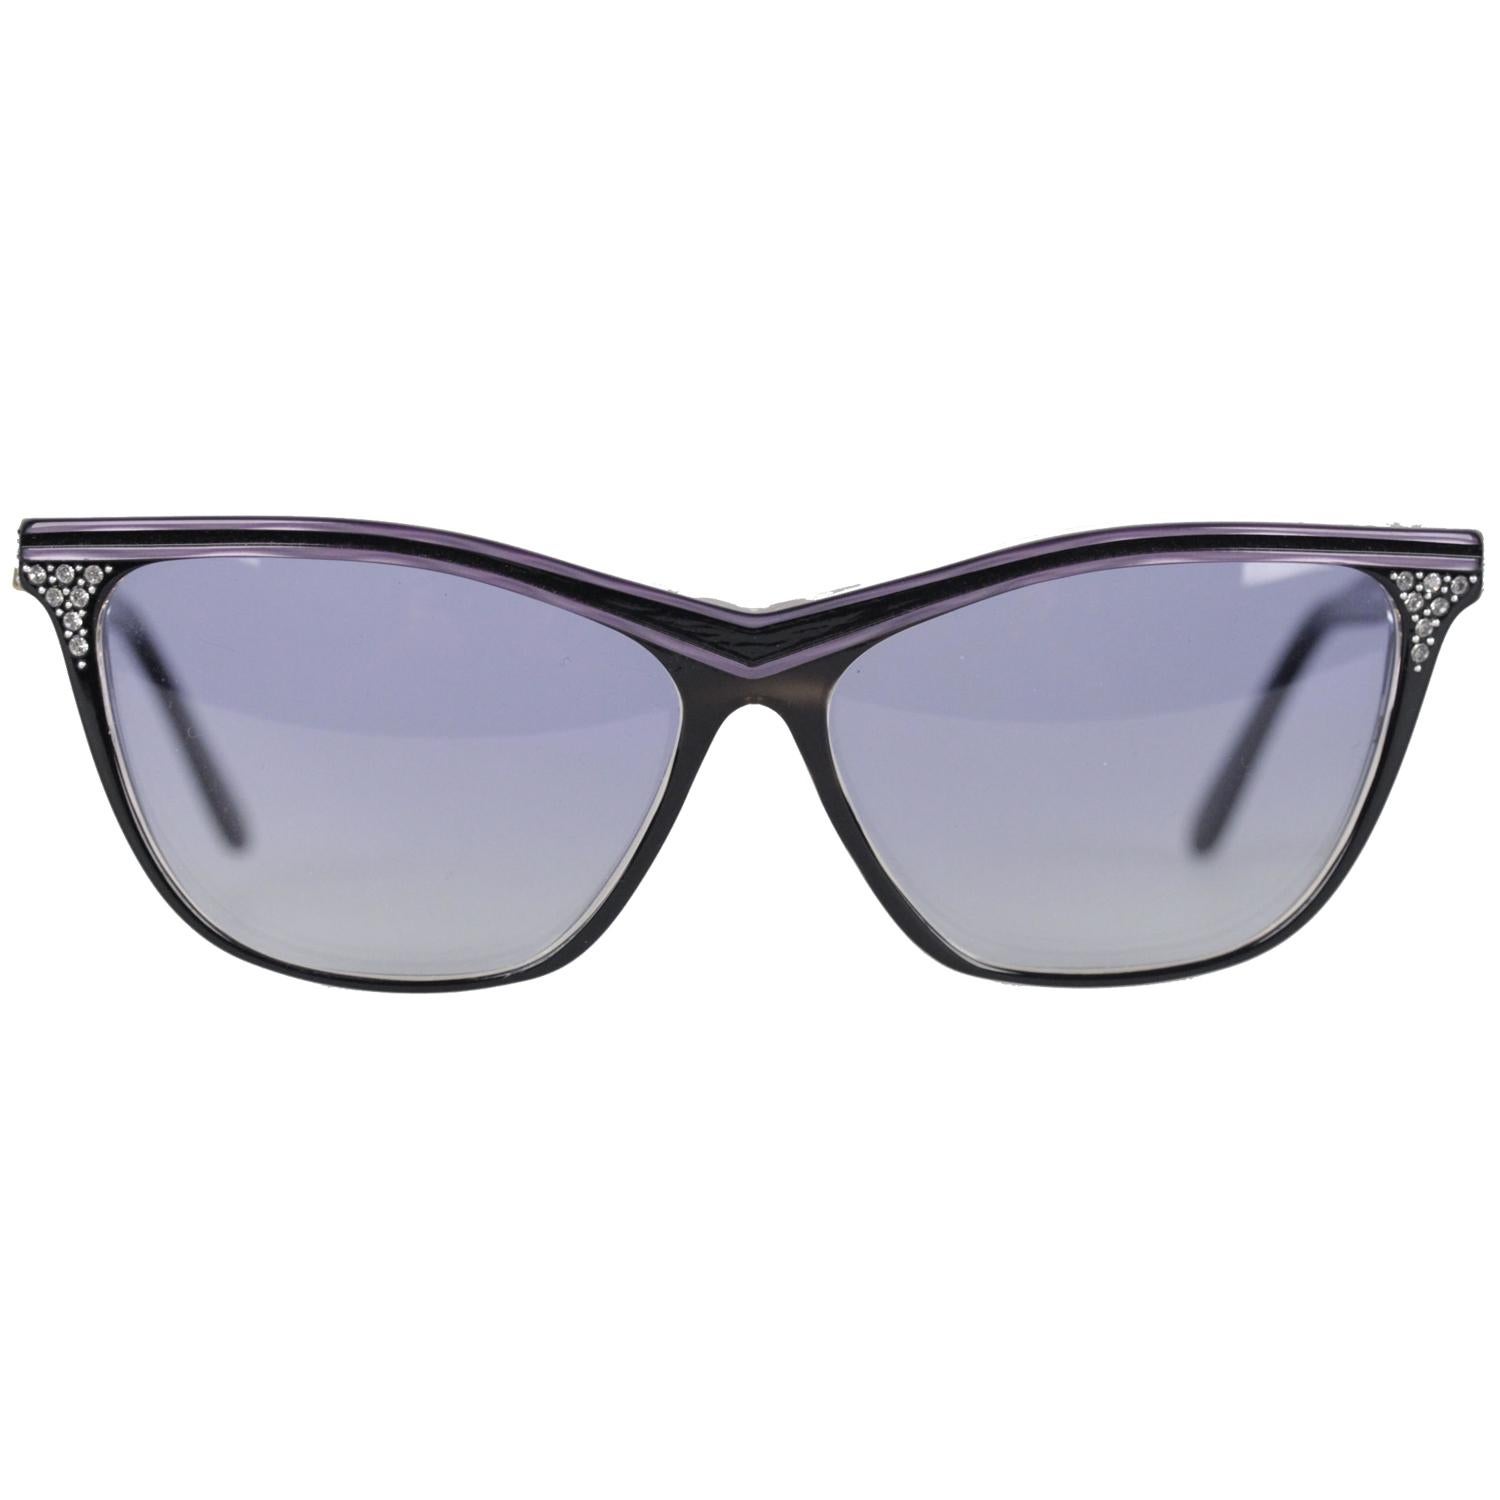 Yves Saint Laurent Vintage Sunglasses 60mm Mod. Hyrtios New Old Stock